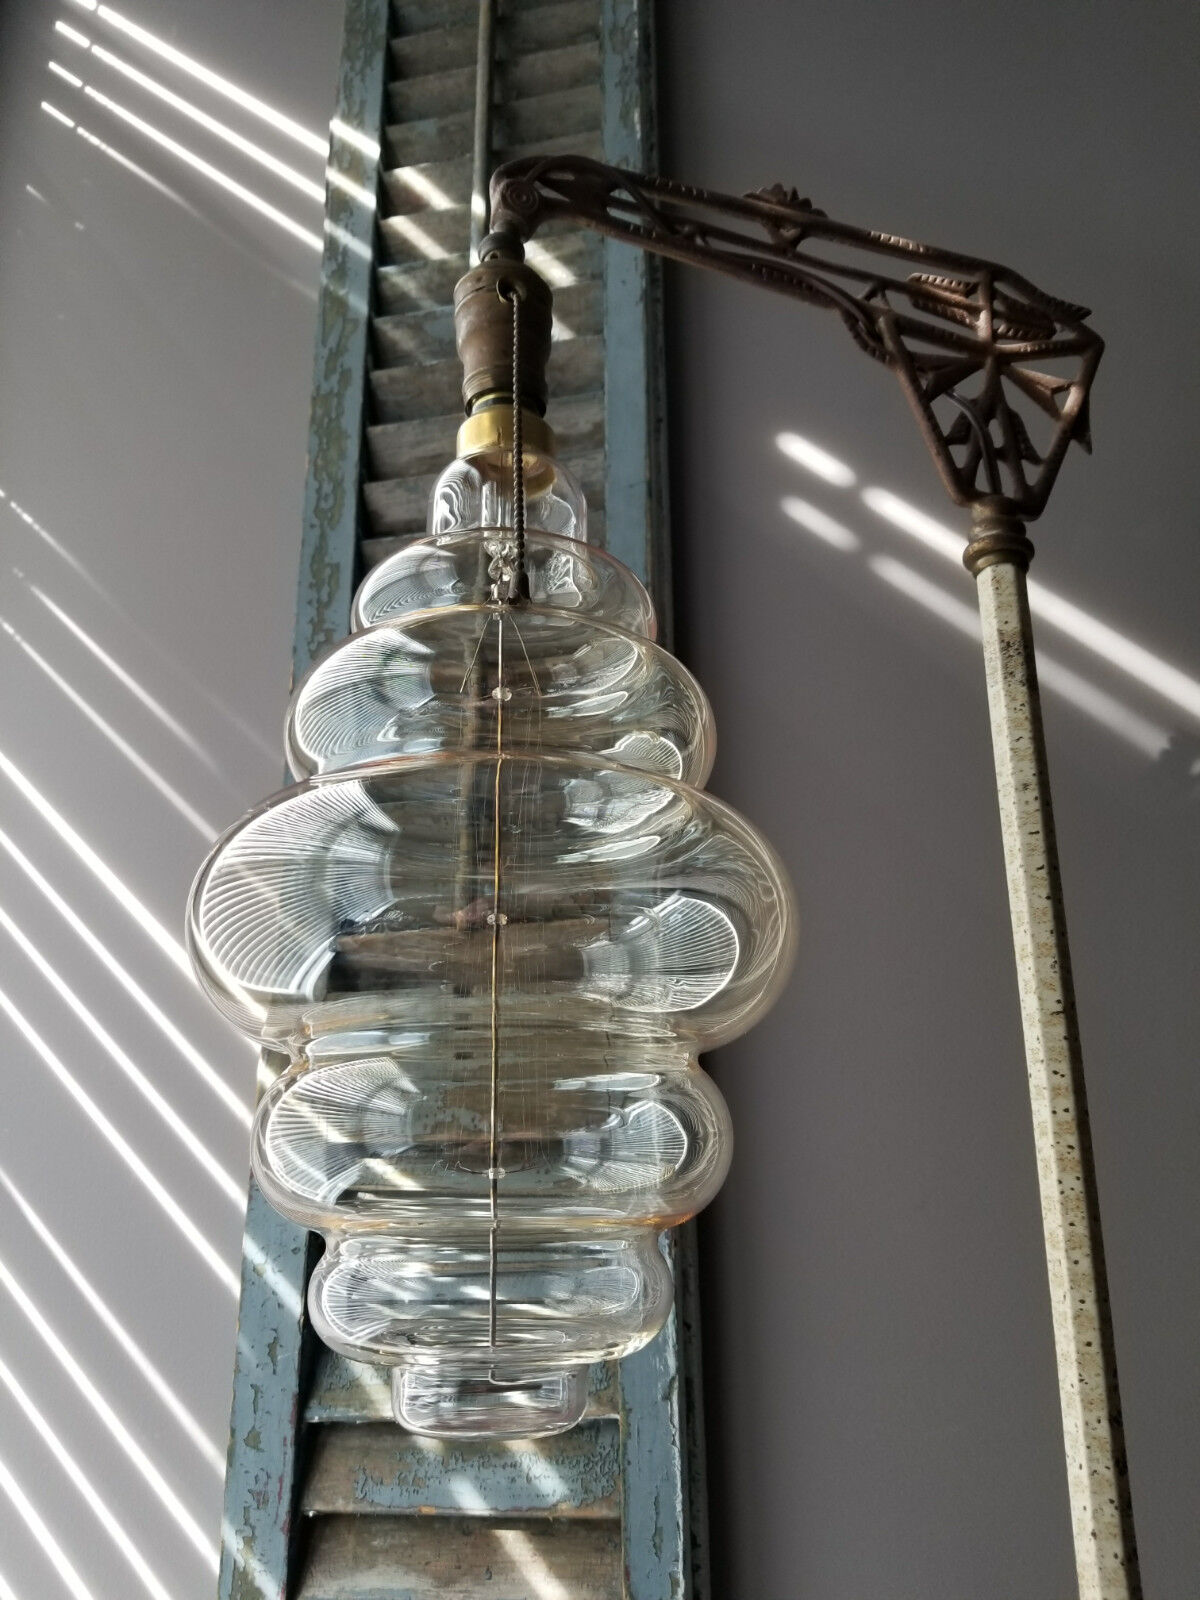 Grand Nostalgic Edison Light Bulb- Oversized Beehive Shape, 60w Incand. Filament